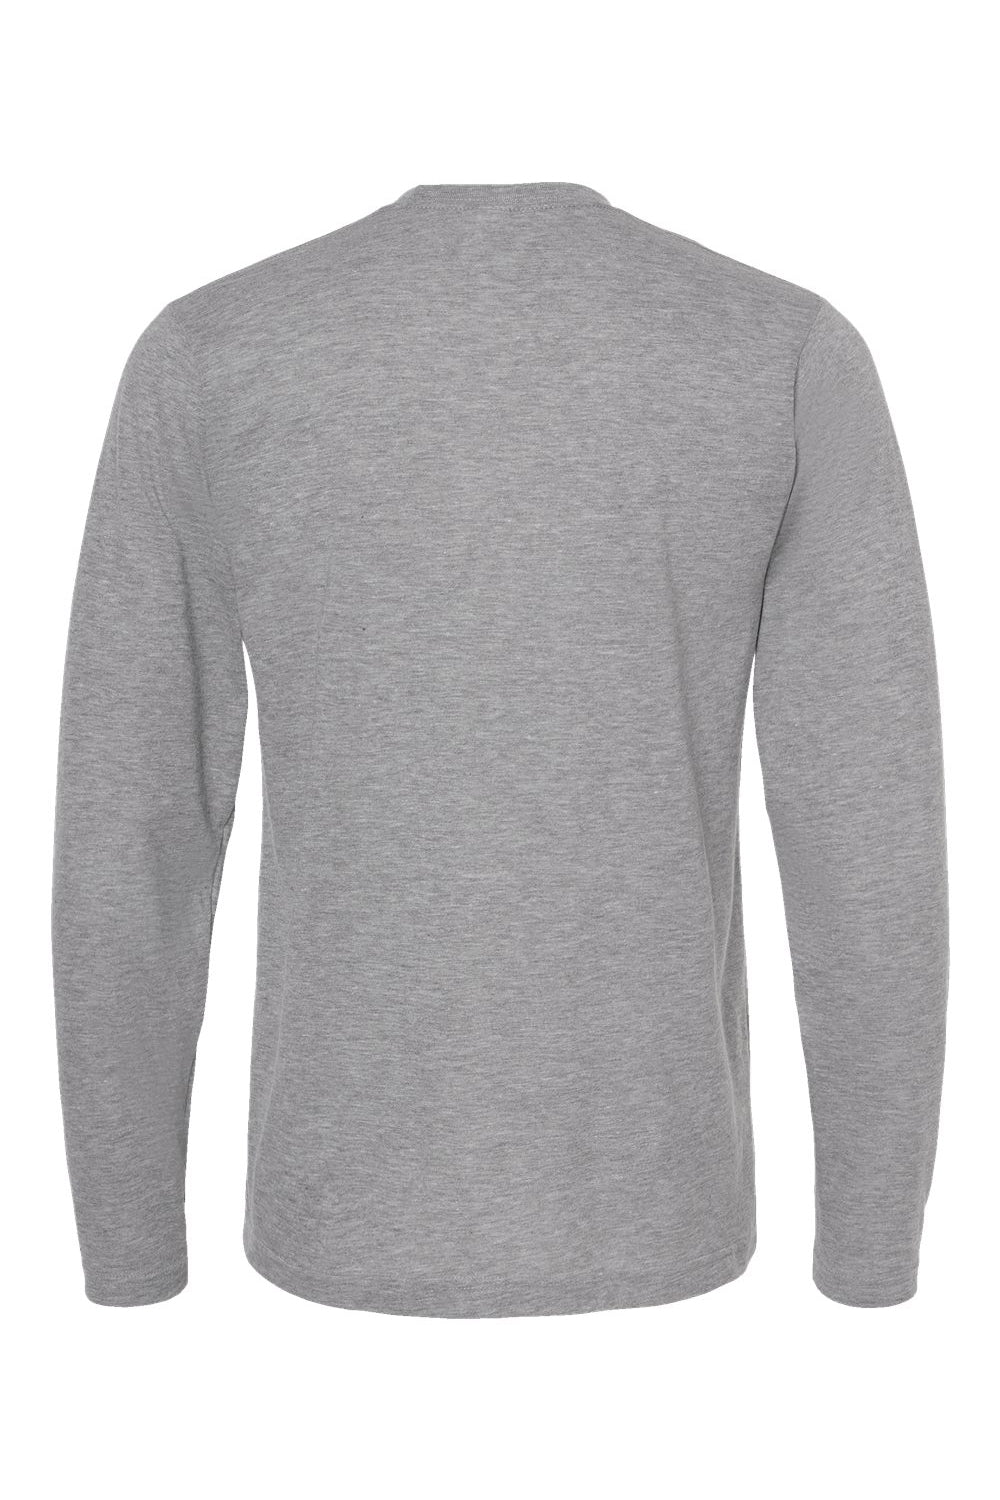 Tultex 242 Mens Poly-Rich Long Sleeve Crewneck T-Shirt Heather Grey Flat Back